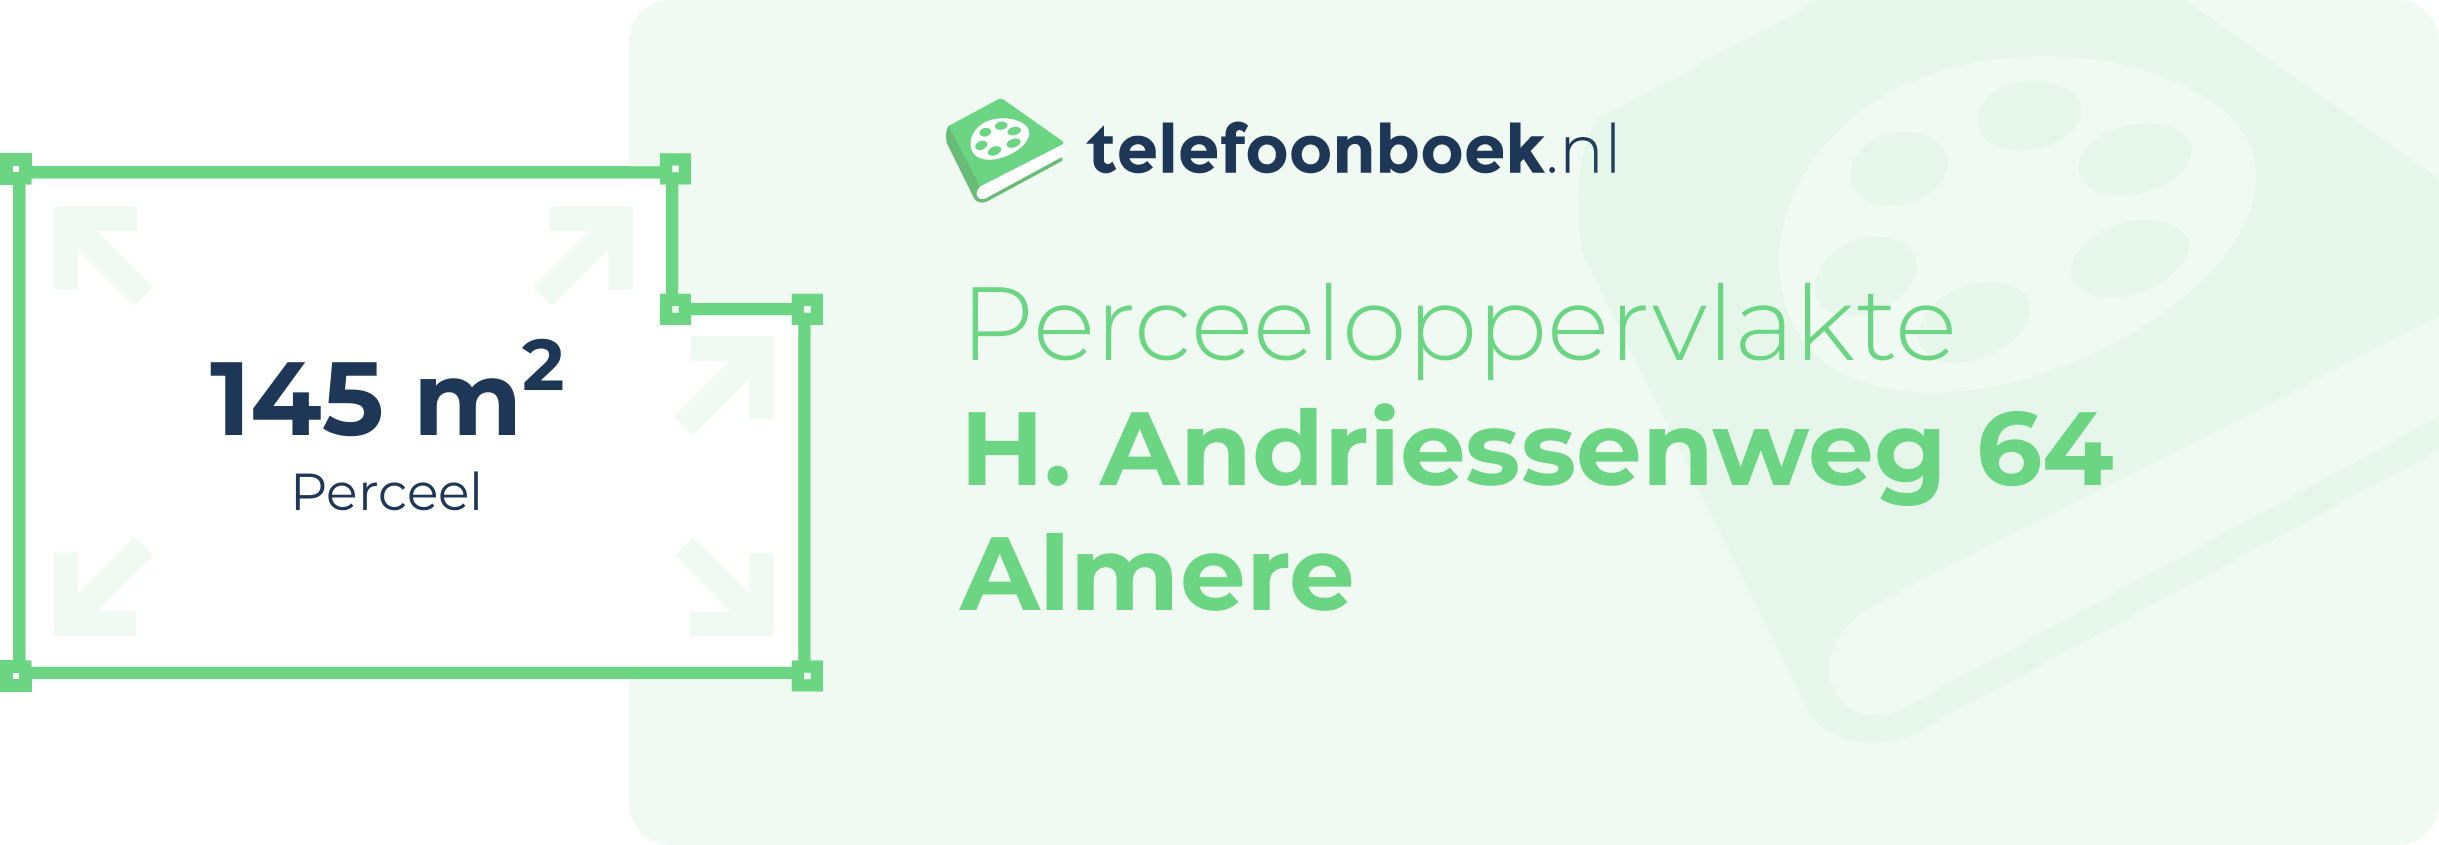 Perceeloppervlakte H. Andriessenweg 64 Almere